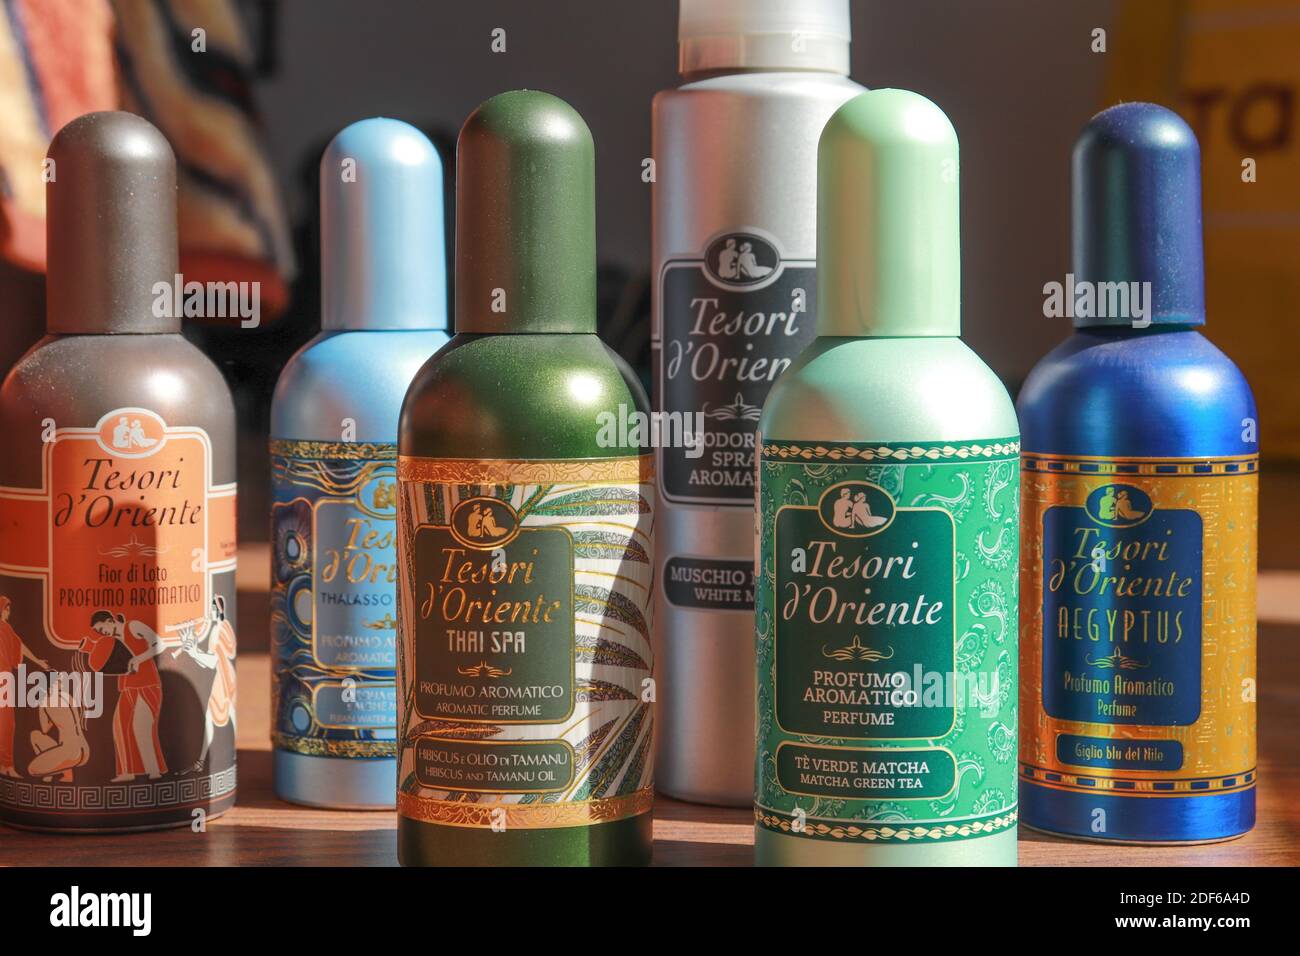 Tesori d'oriente parfume, different smells, deodorant, colorful Stock Photo  - Alamy